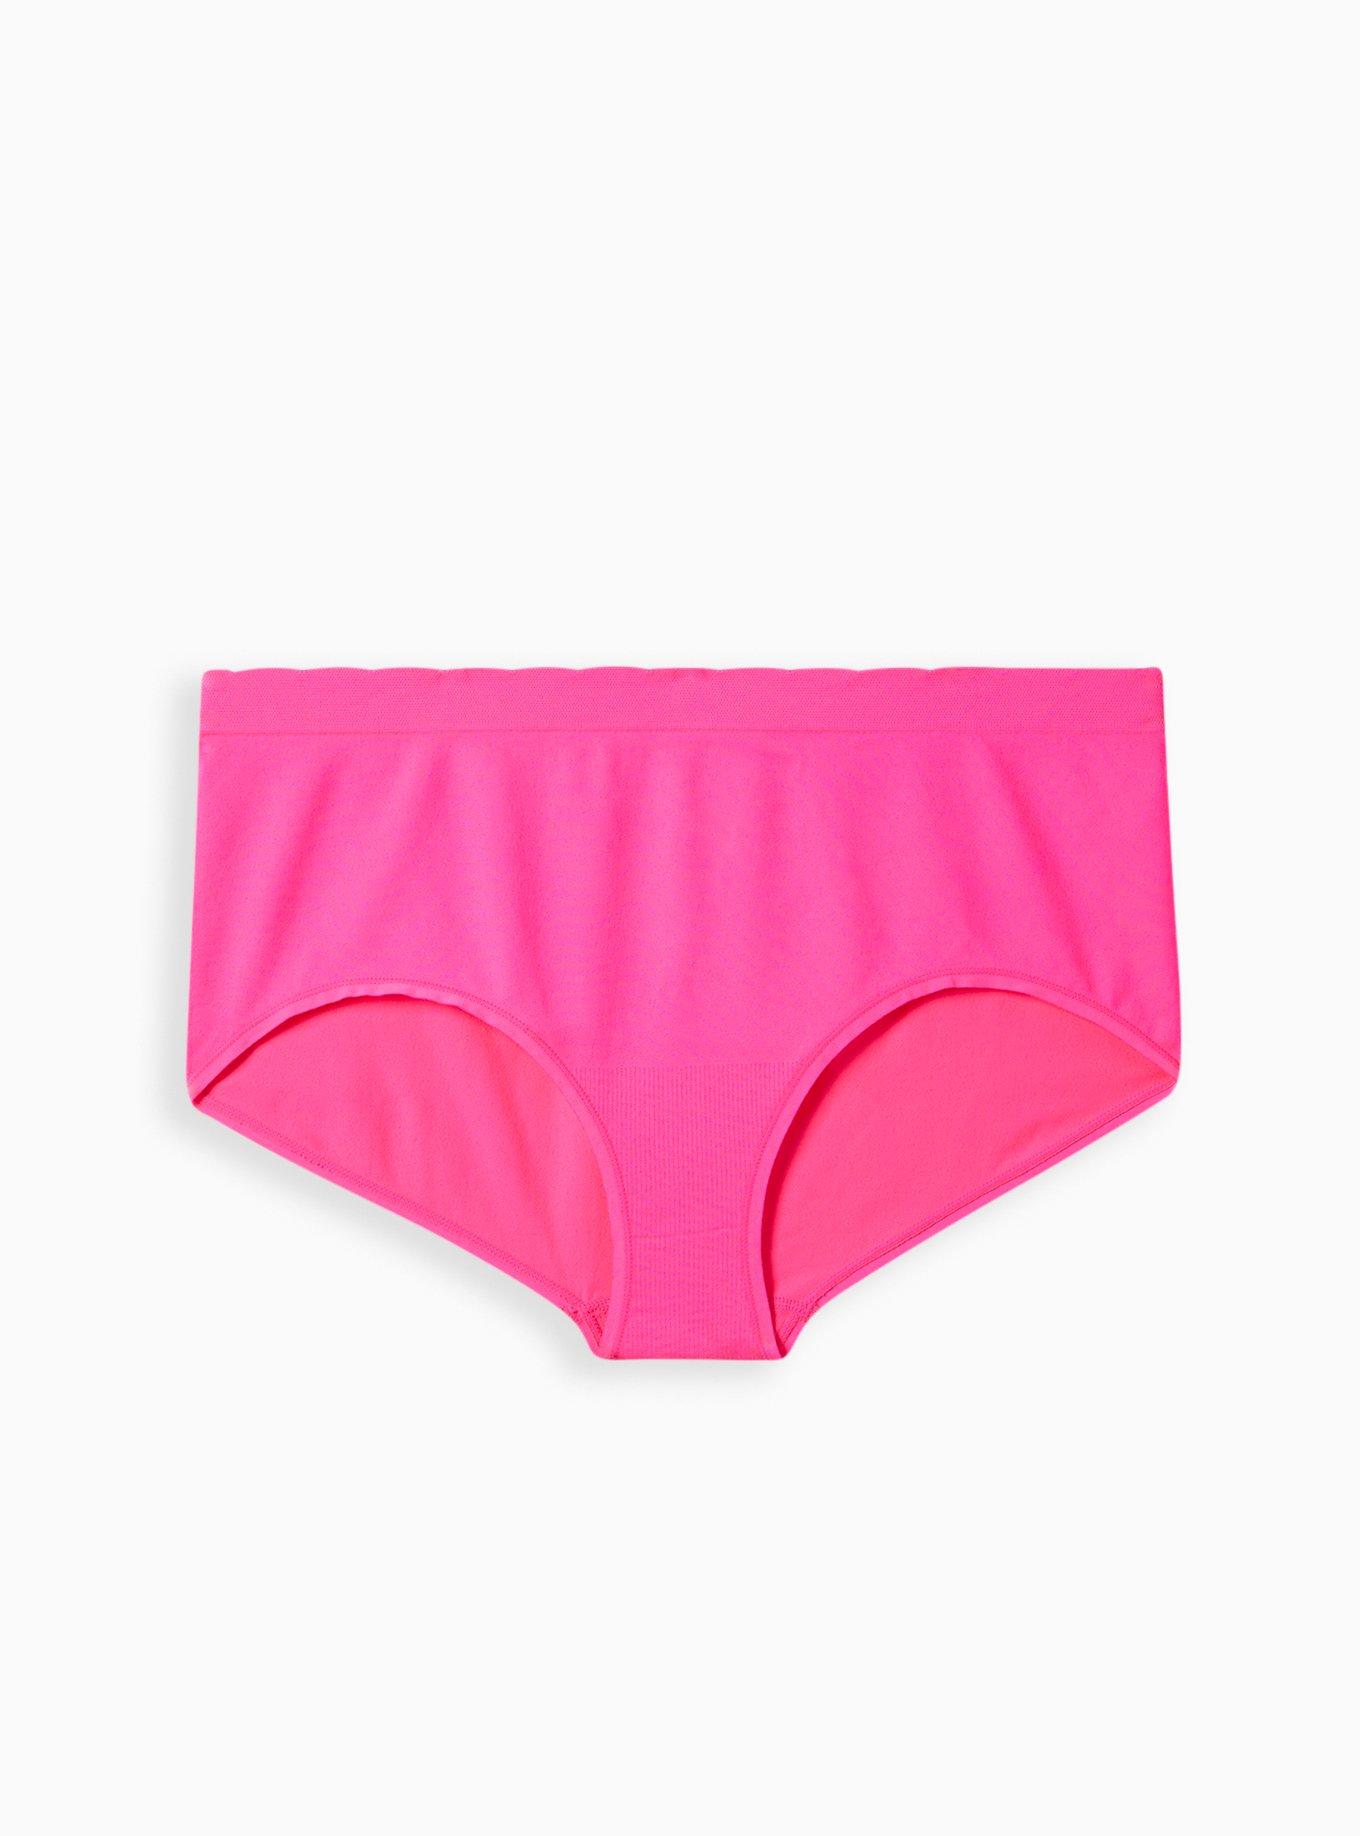  Seamless Cheek𝐲 Underwear for Women Women Sexy